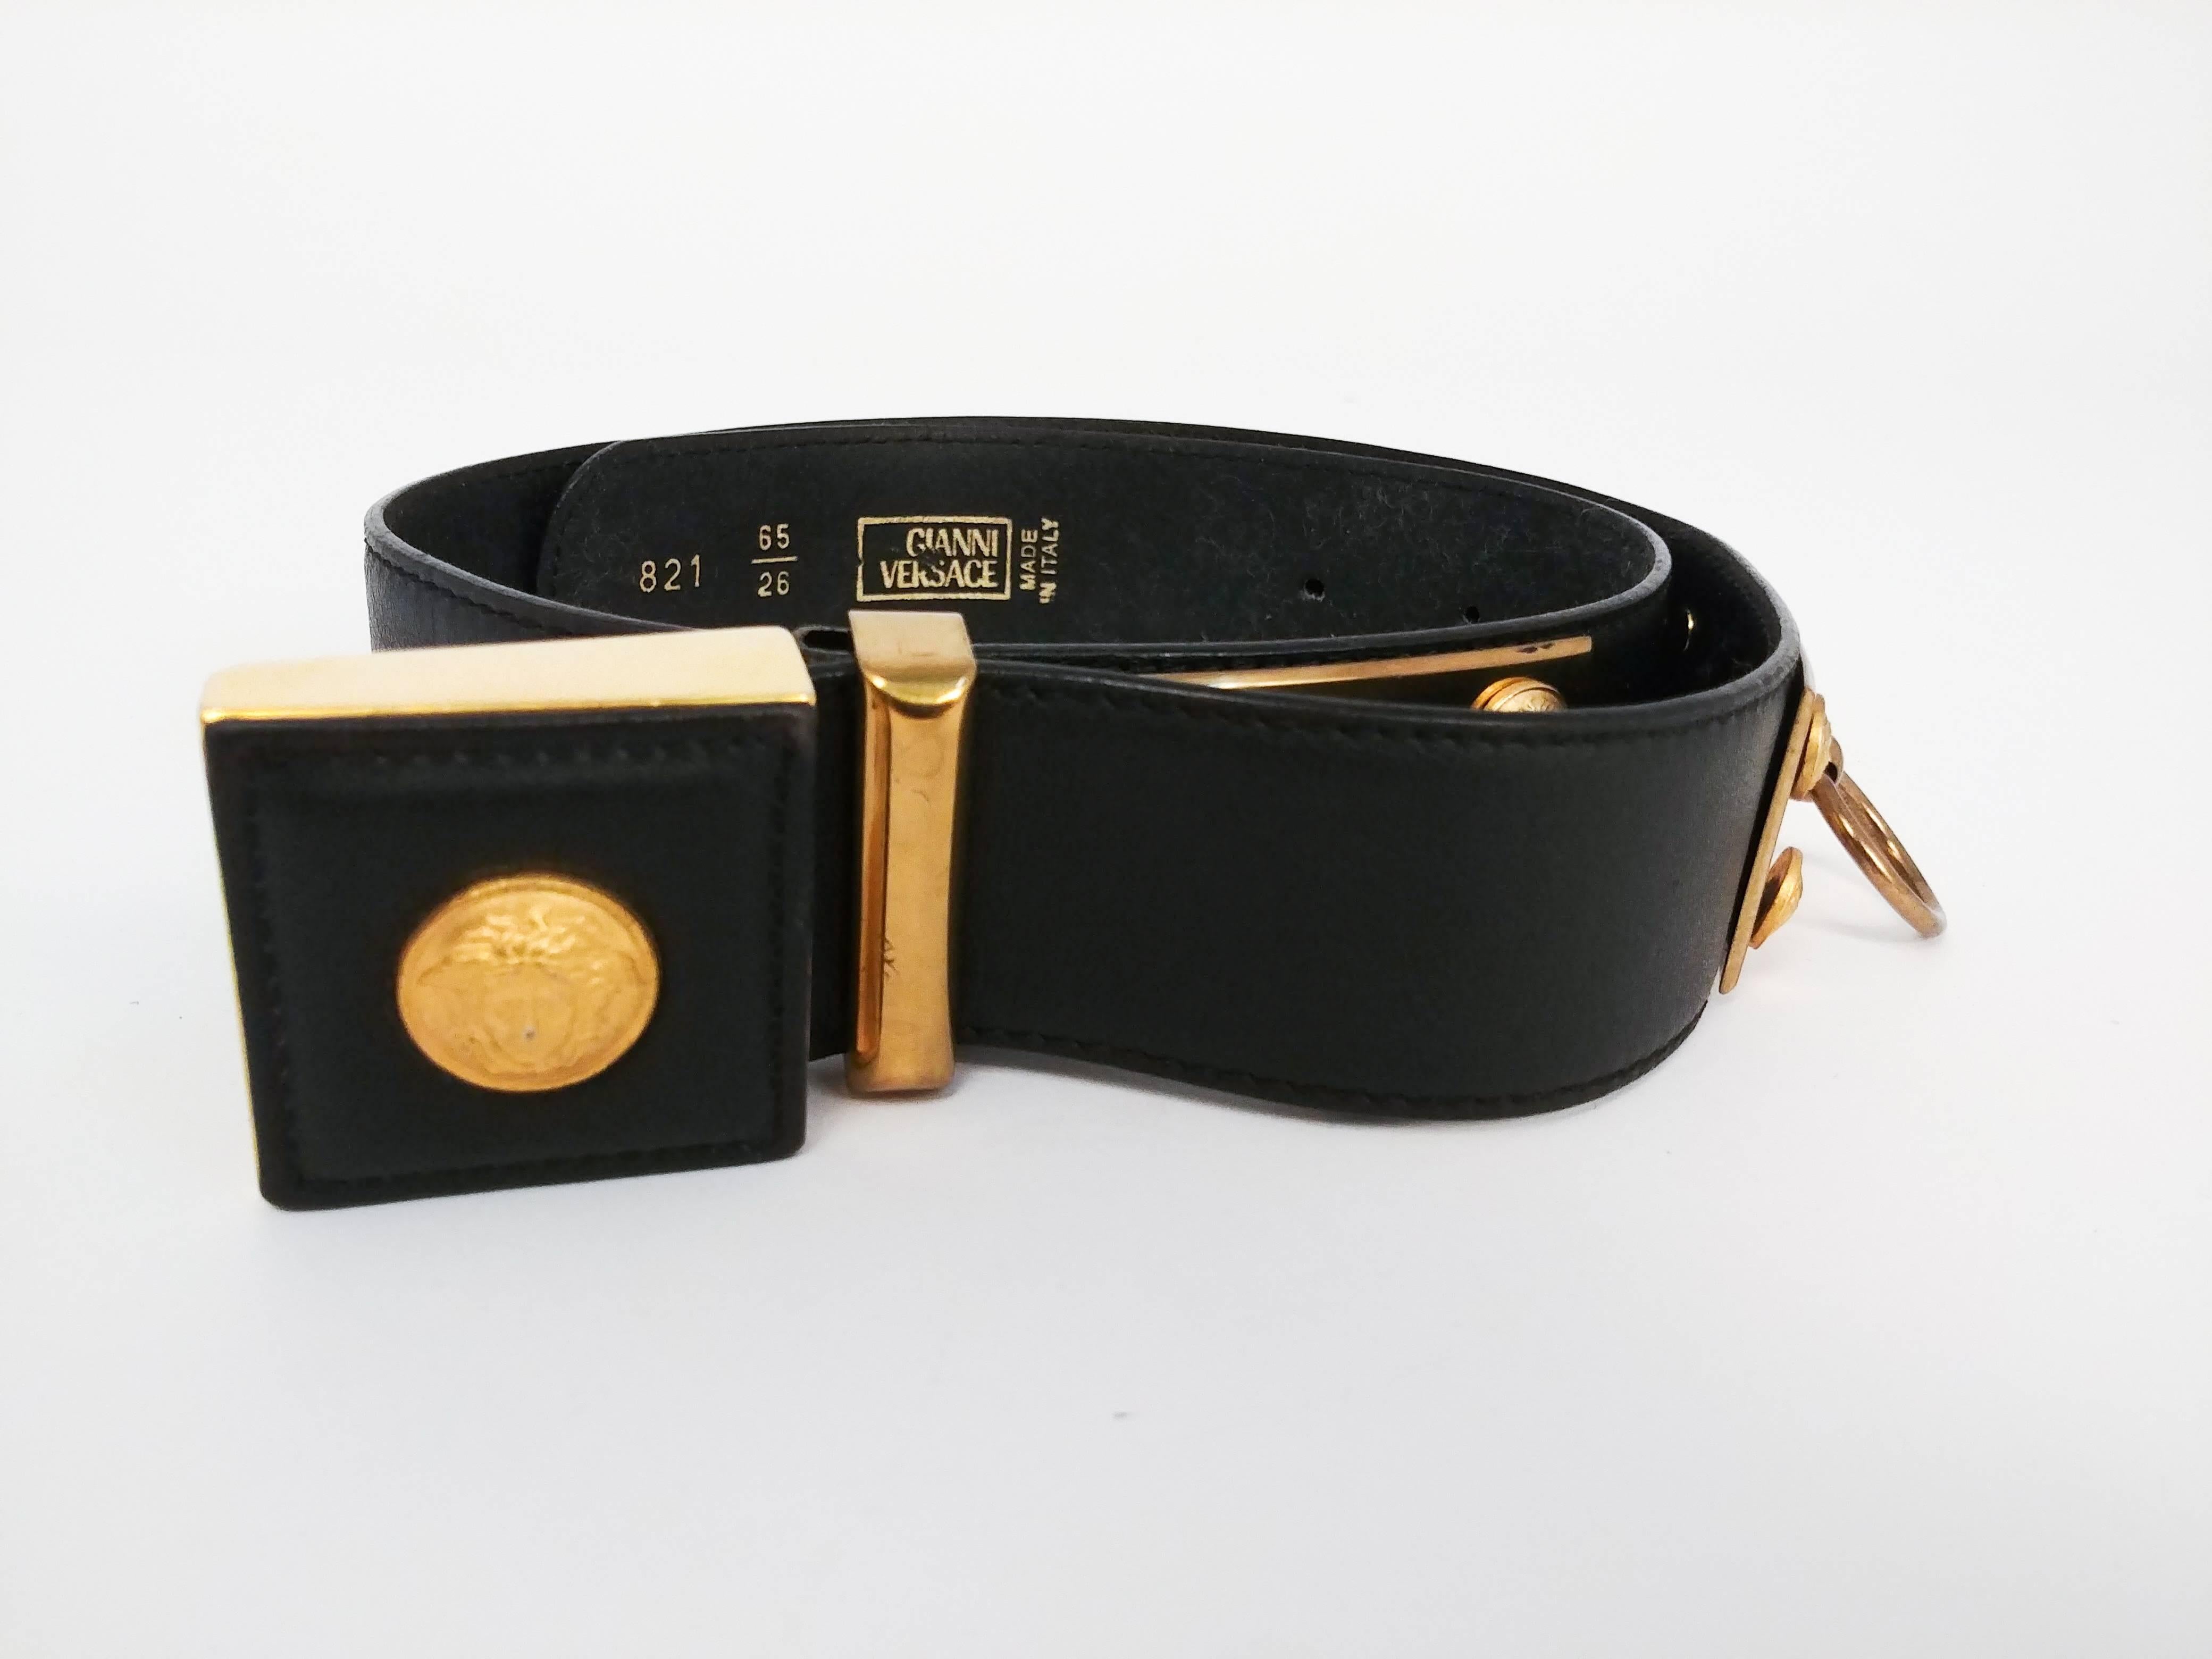 1980s Versace Leather Belt. Iconic logo belt buckle. O-ring details at sides. 